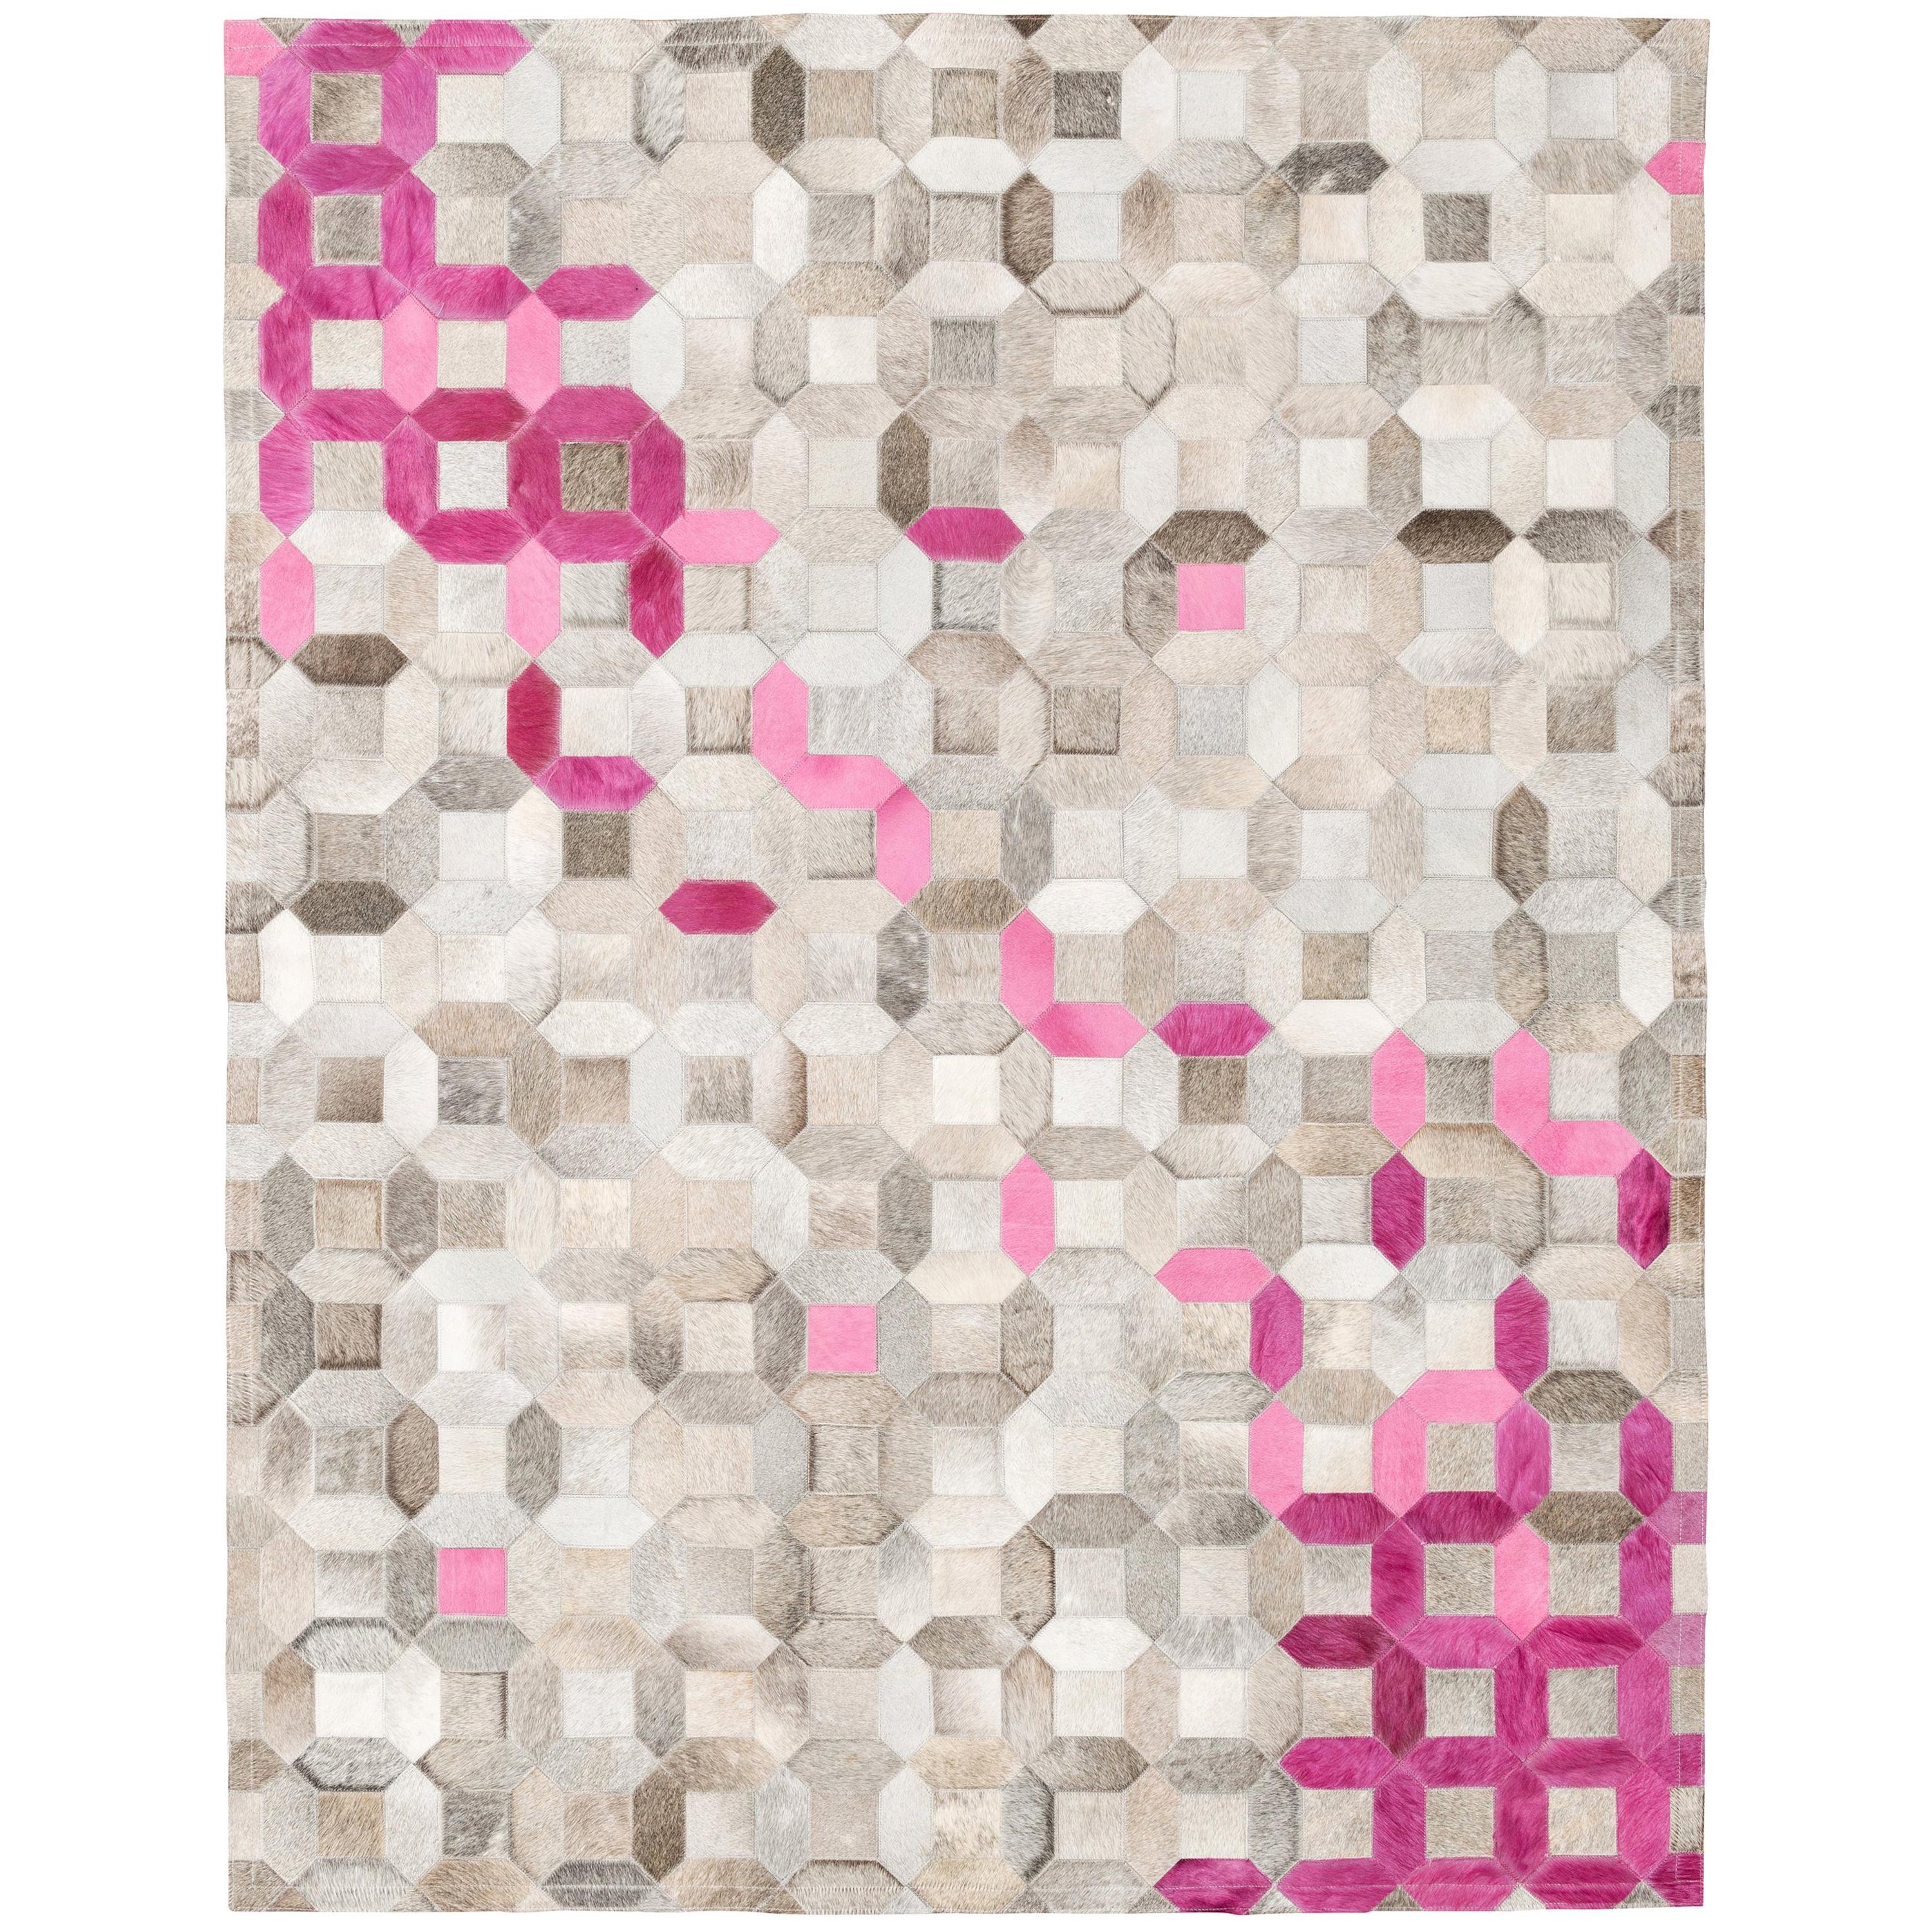 In Rosa, Grau Tessellation Trellis Rosa anpassbarer Rindsleder-Bodenteppich X-groß